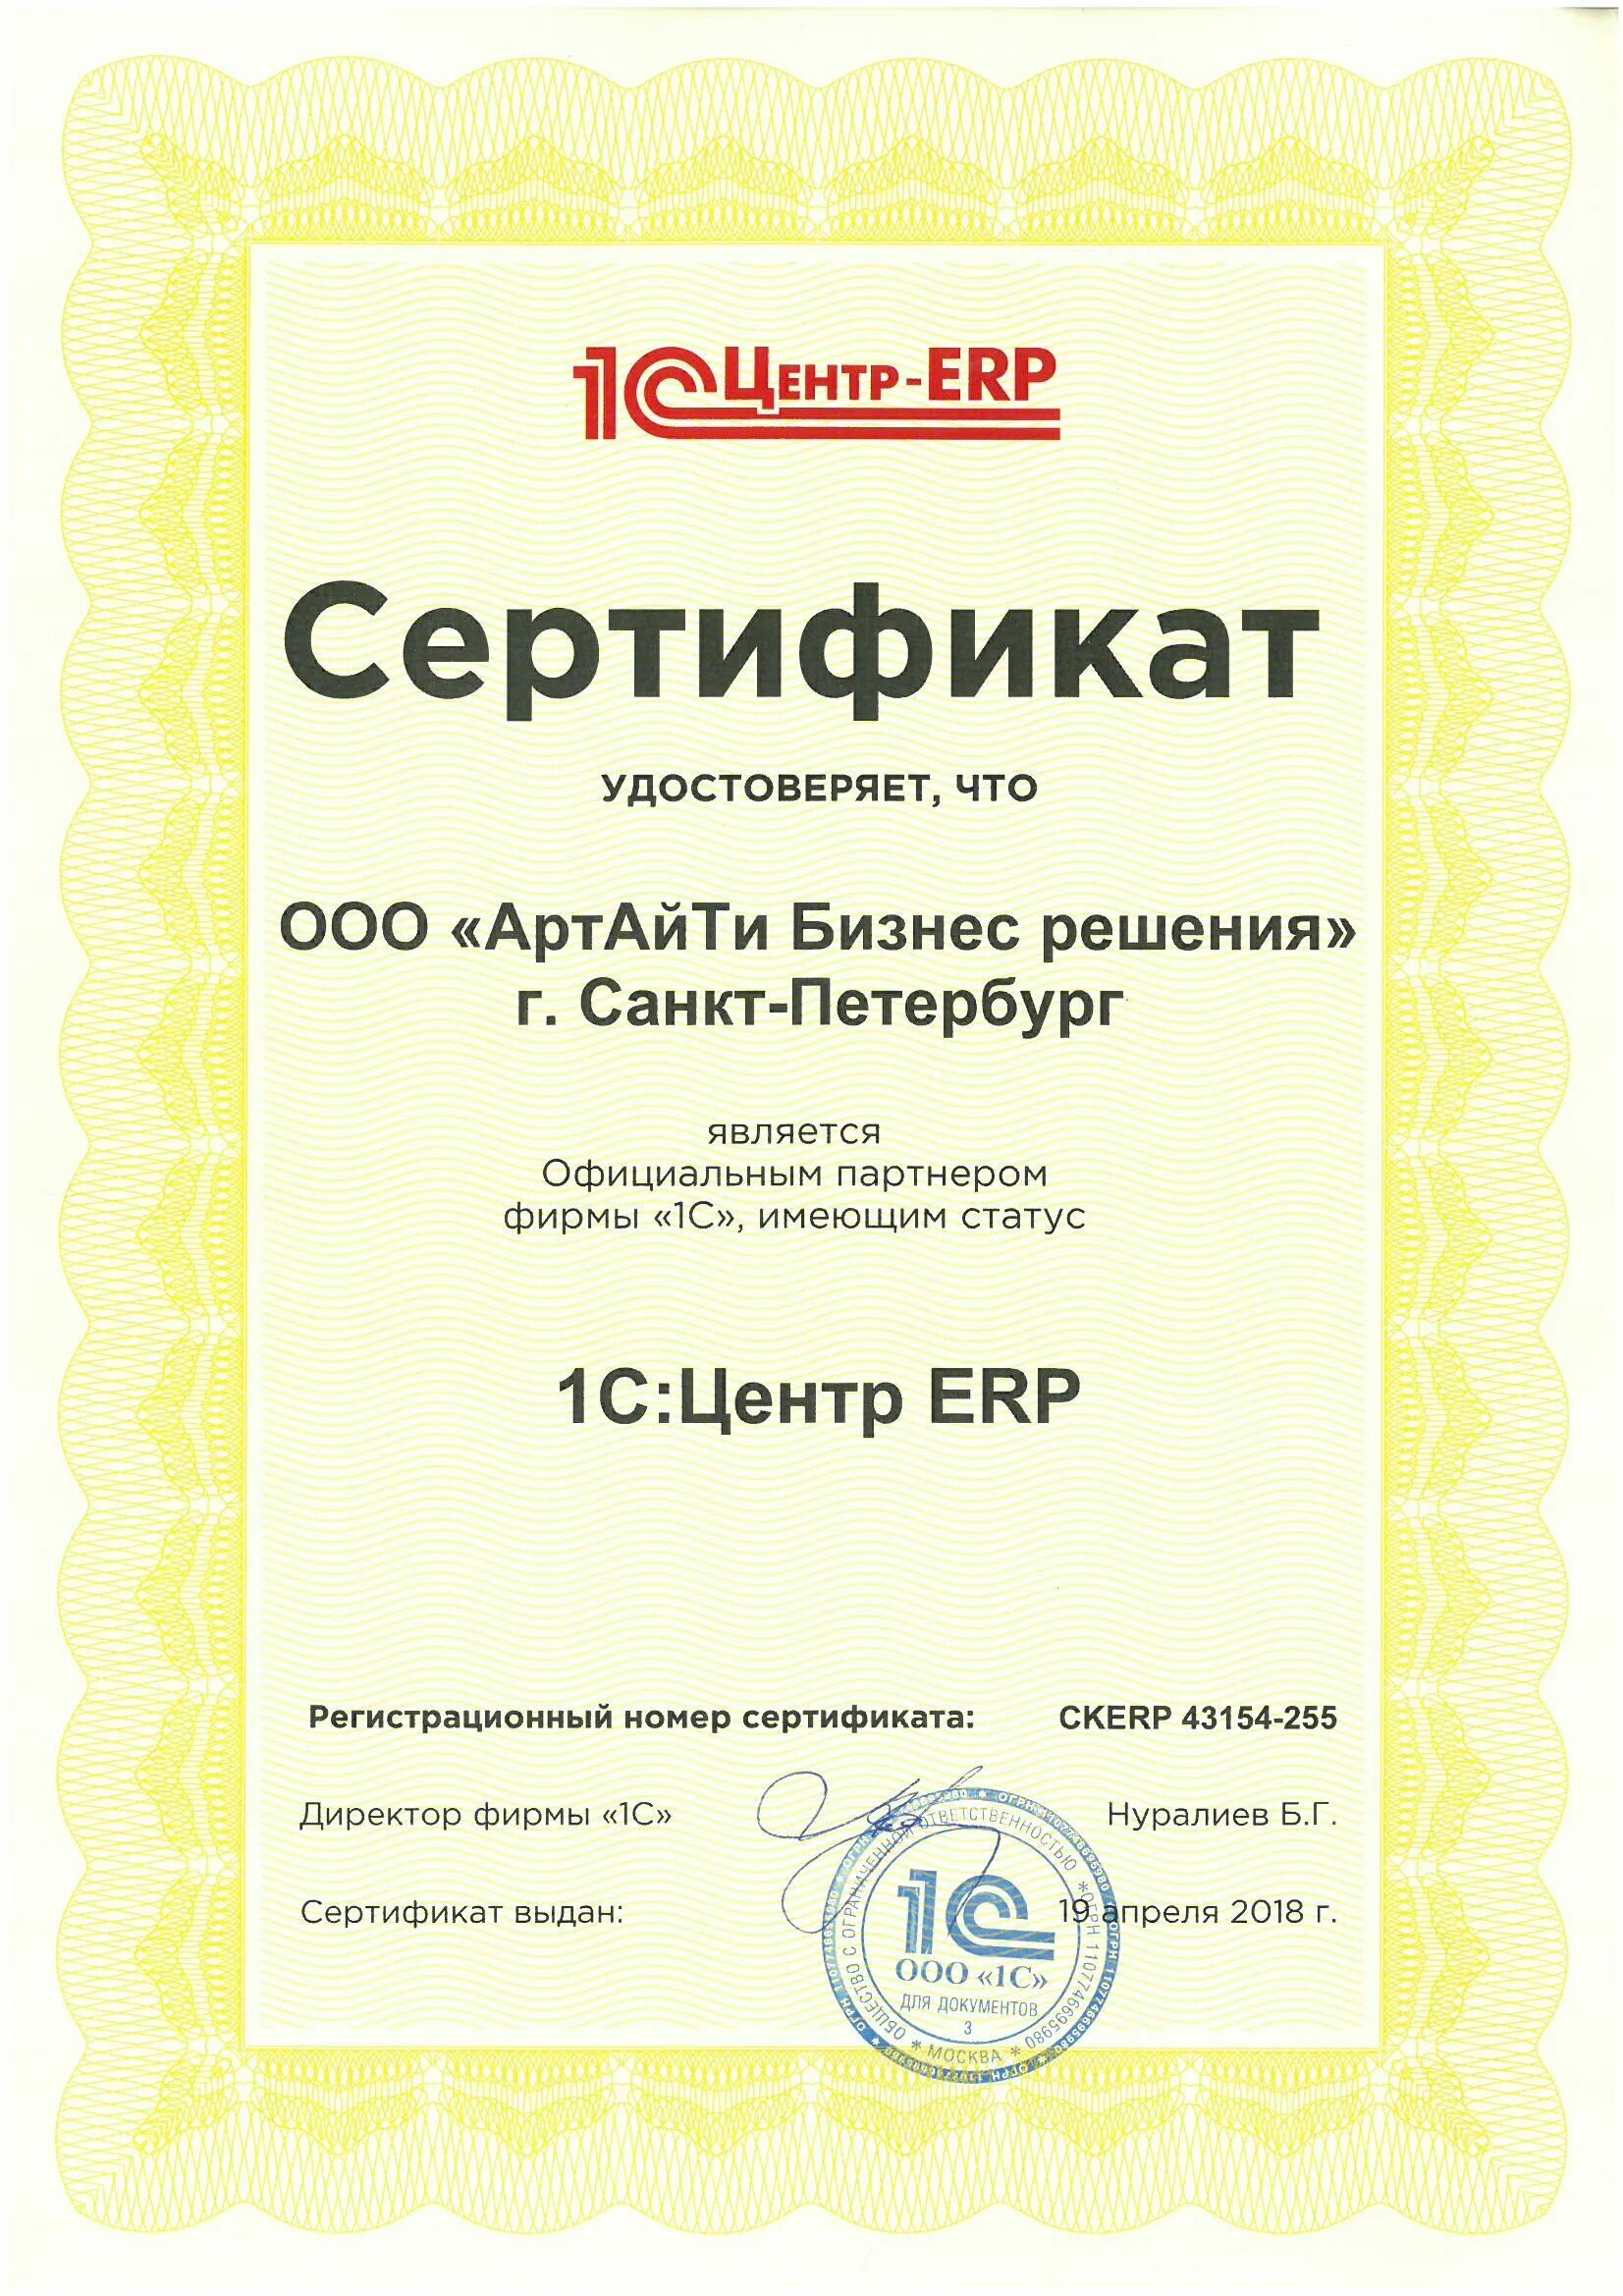 Статус 1с erp. 1с центр ERP. Сертификат 1с. Сертификат партнера 1с. Сертификат от фирмы «1с».